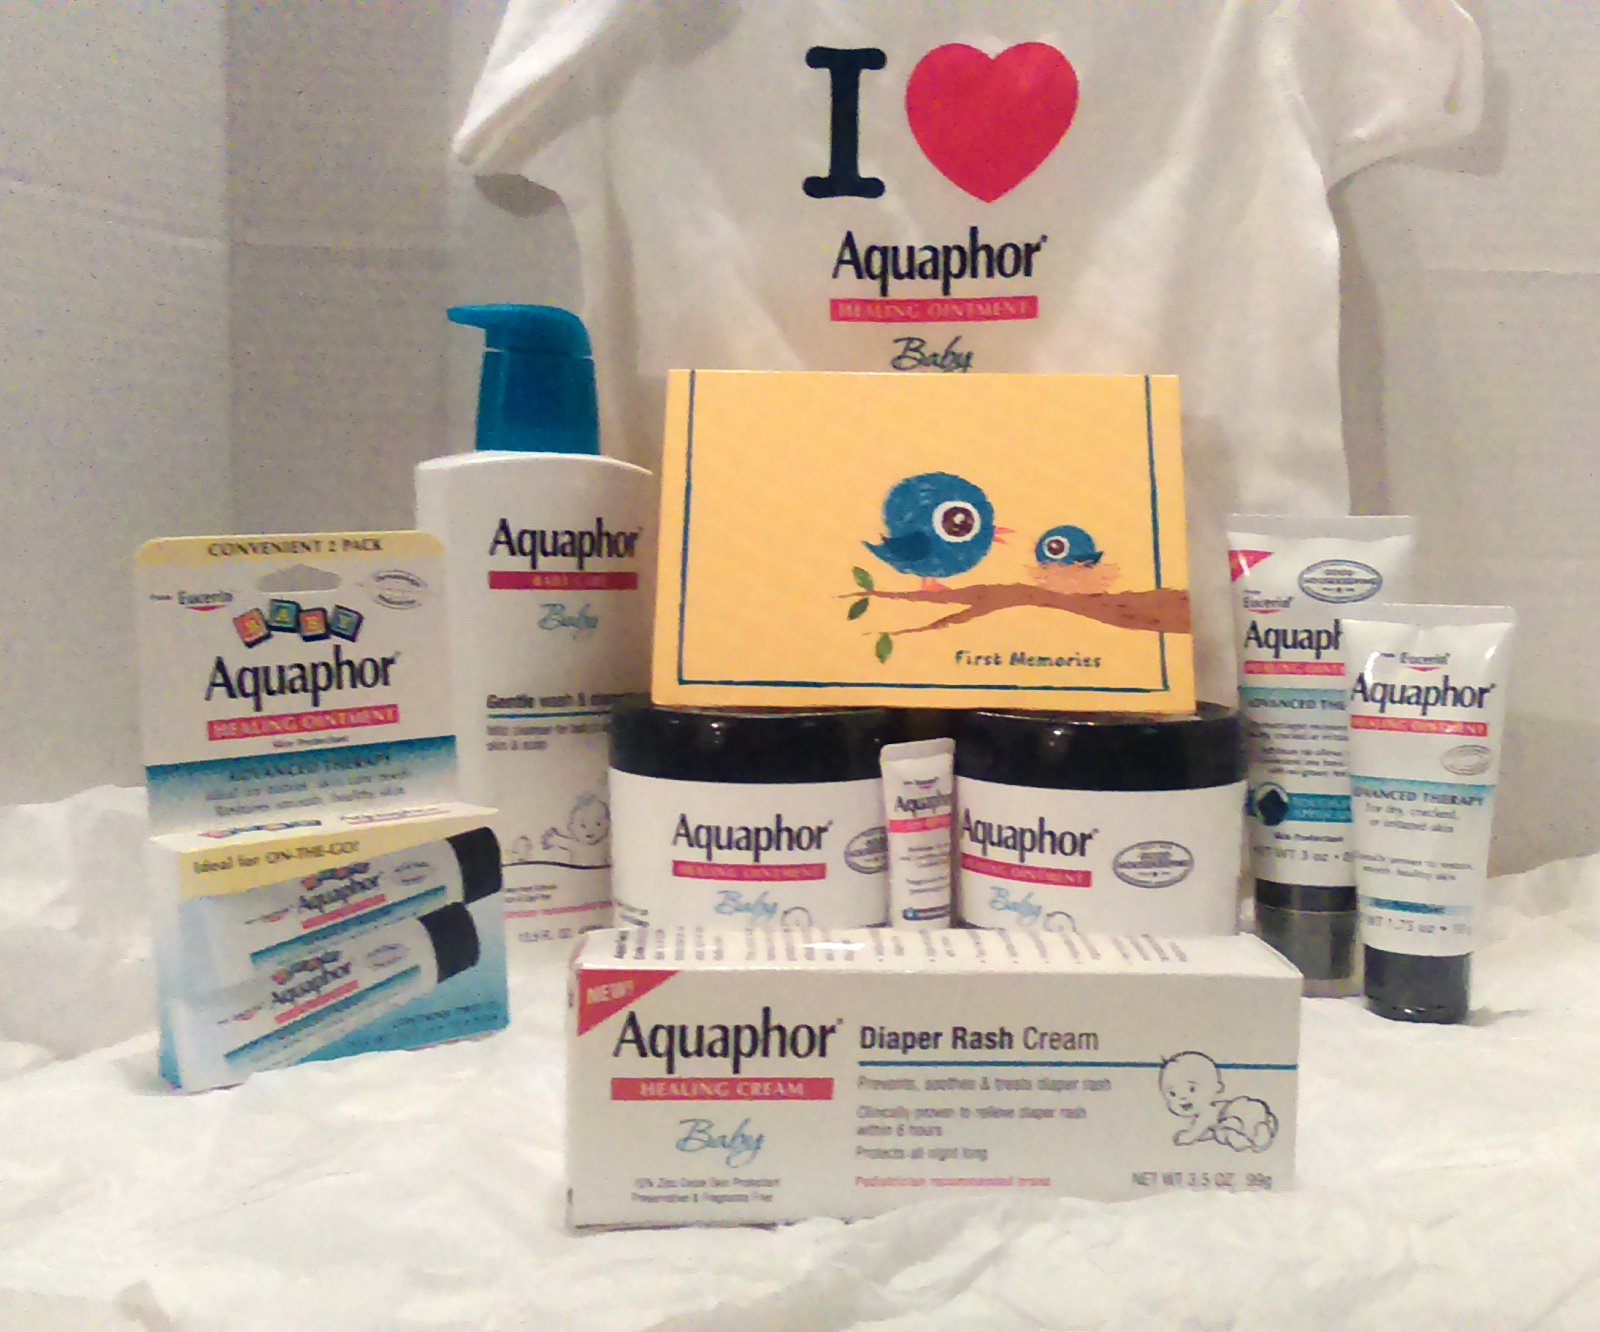 Aquaphor Diaper Rash Cream Review #AquaphorIt #SPON